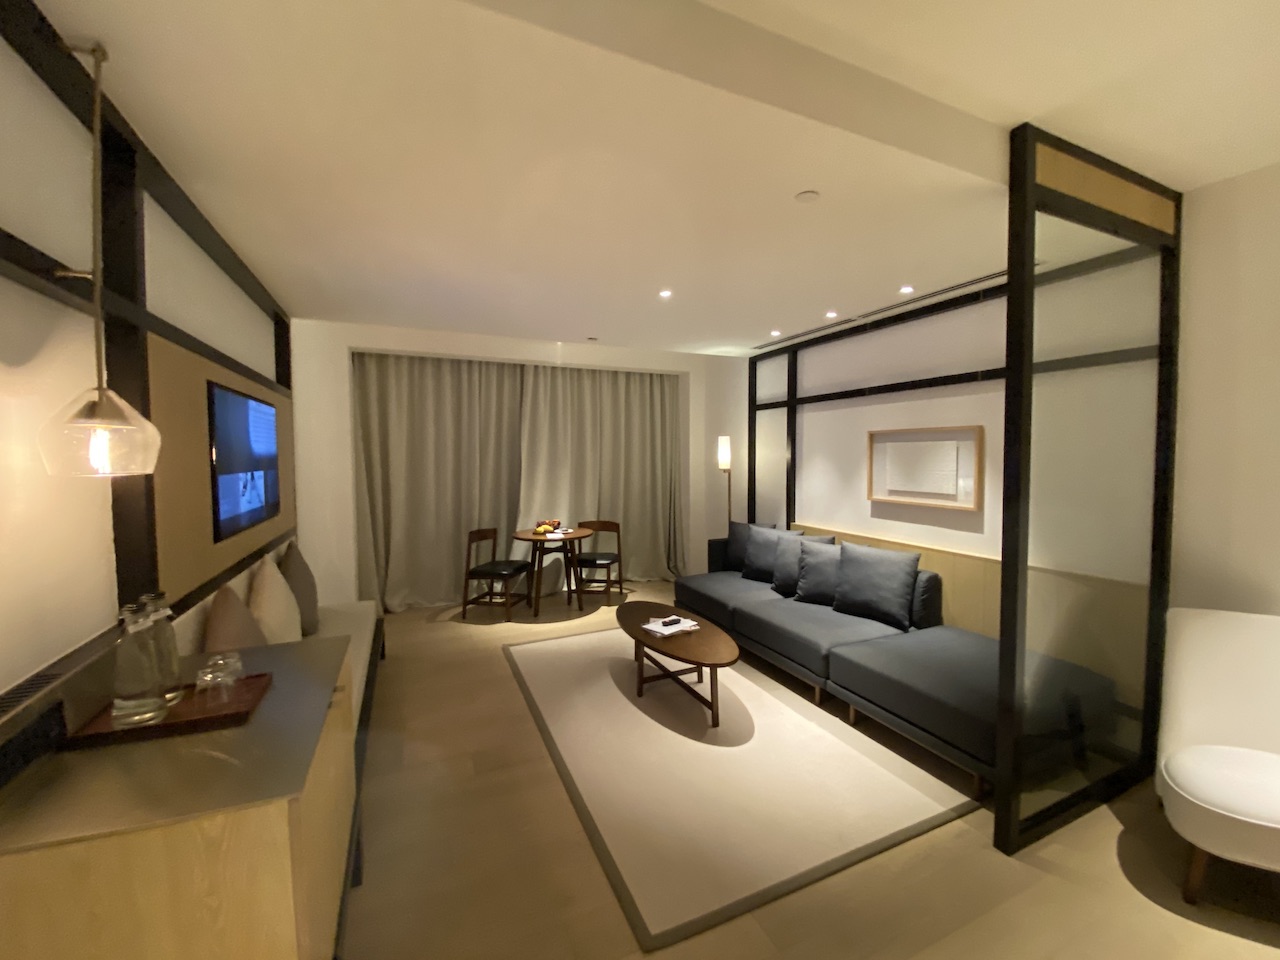 Bangsar suite living room